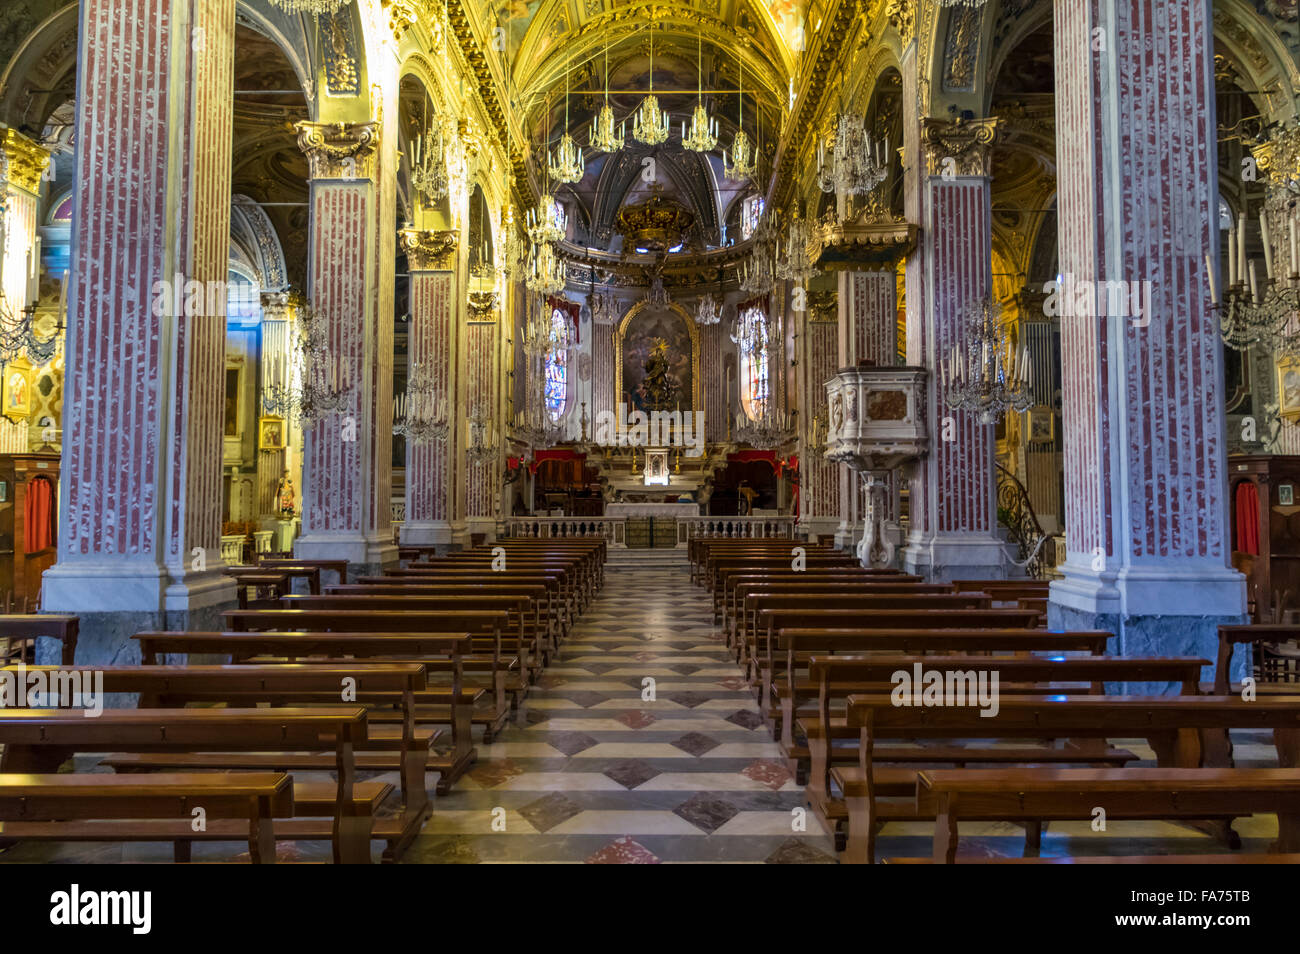 Nave de la Basílica de Santa Maria Assunta, la principal iglesia católica romana de la ciudad de Camogli, Liguria, Italia. Foto de stock